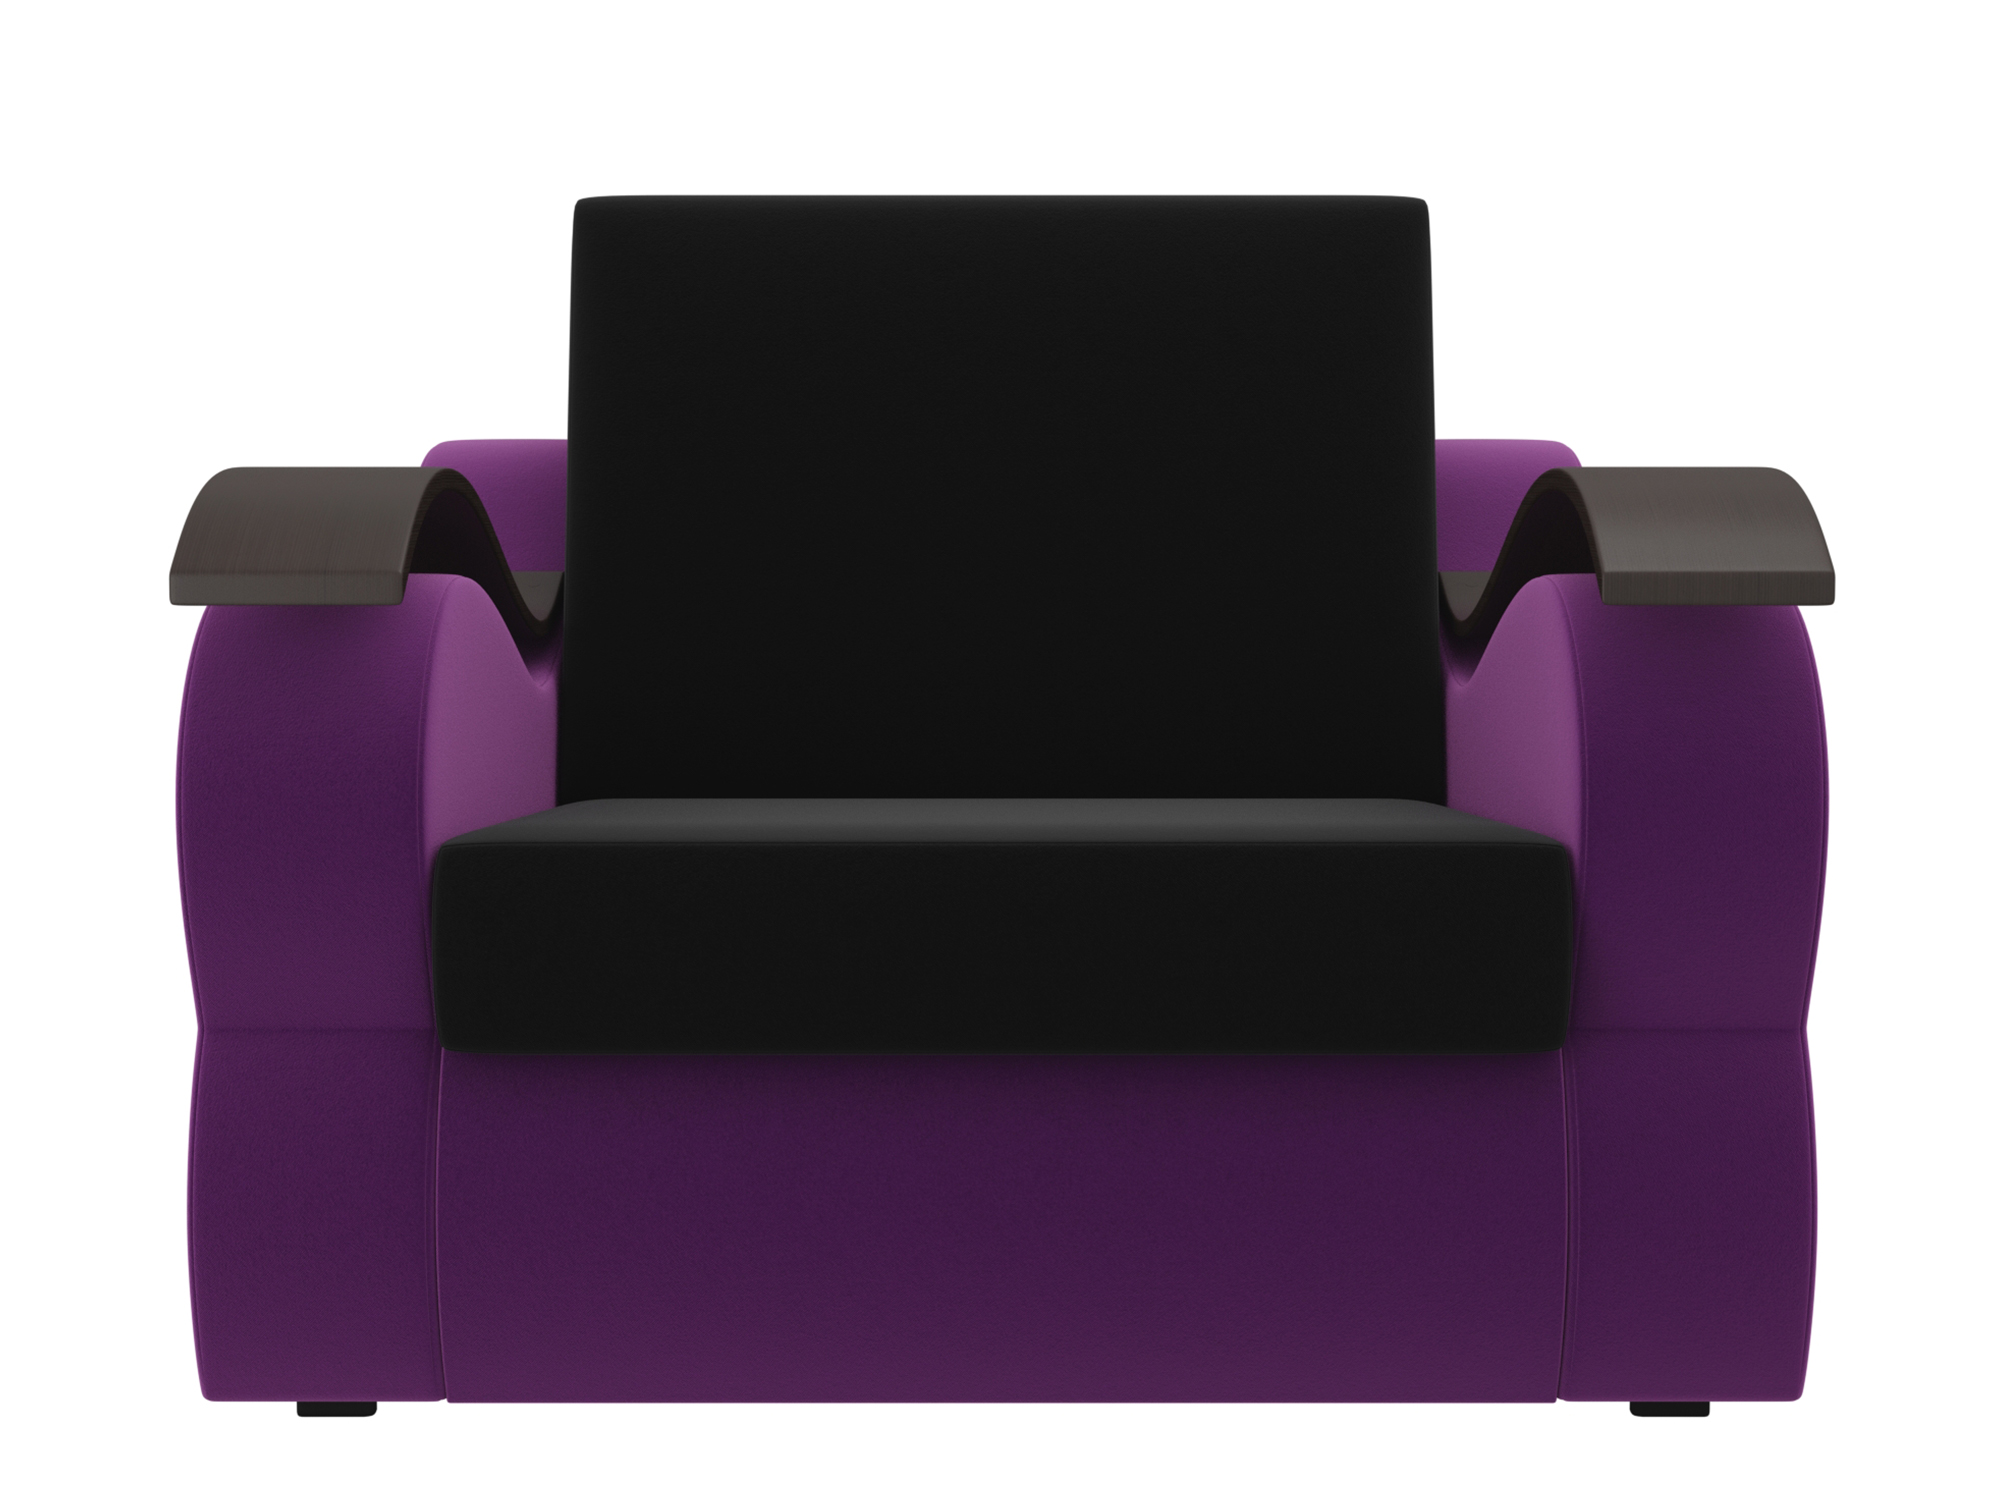 кресло меркурий 80х190 mebelvia бежевый коричневый рогожка микровельвет дсп лдсп Кресло Меркурий (80х190) MebelVia Фиолетовый, Черный, Микровельвет, ДСП, ЛДСП